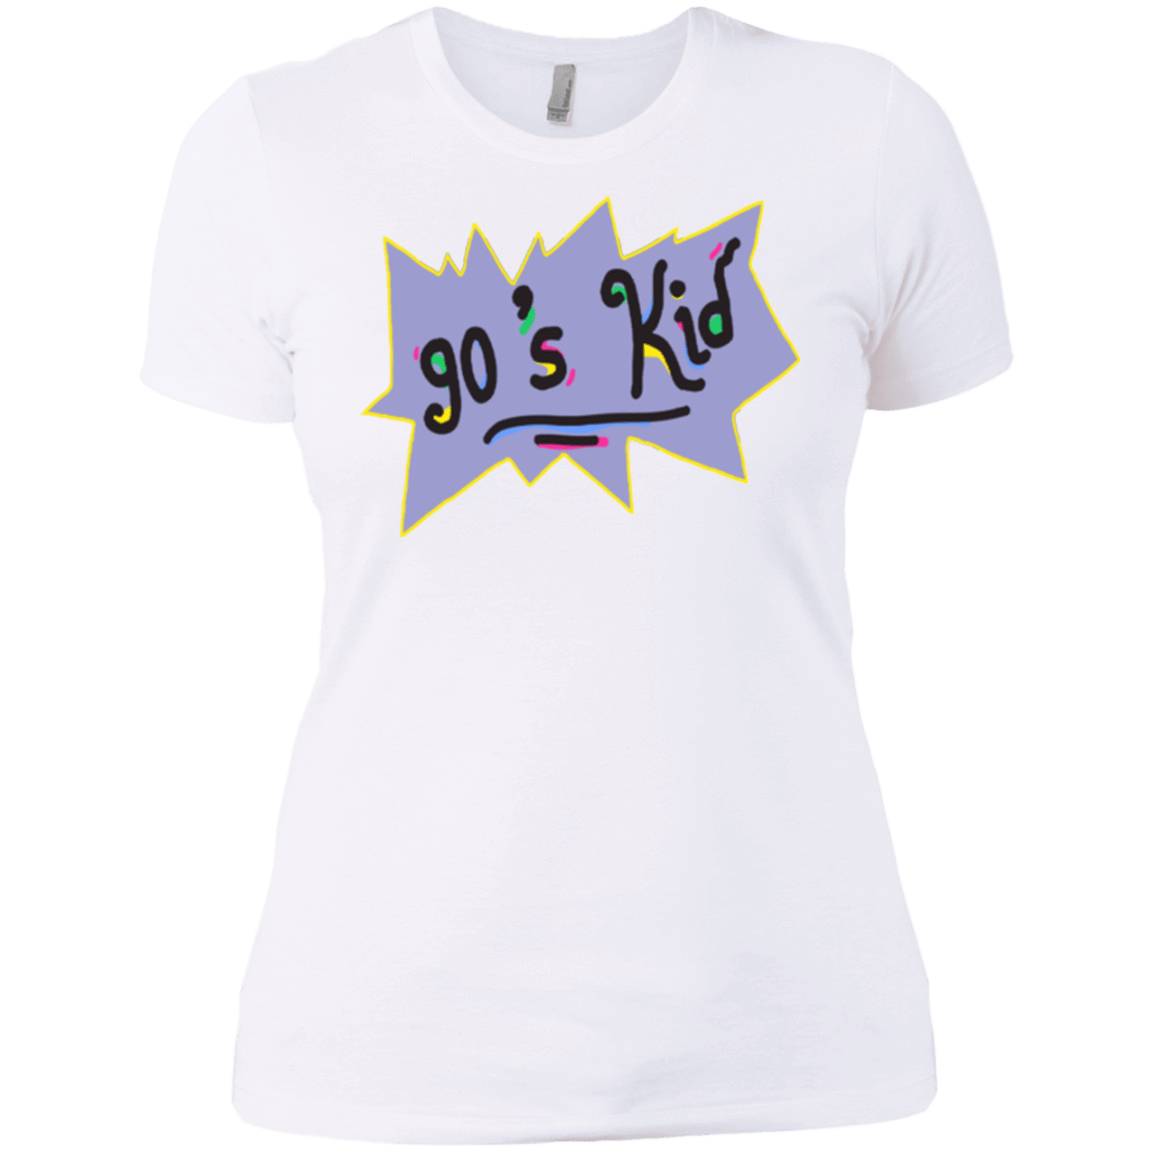 T-Shirts White / X-Small 90's Kid Women's Premium T-Shirt